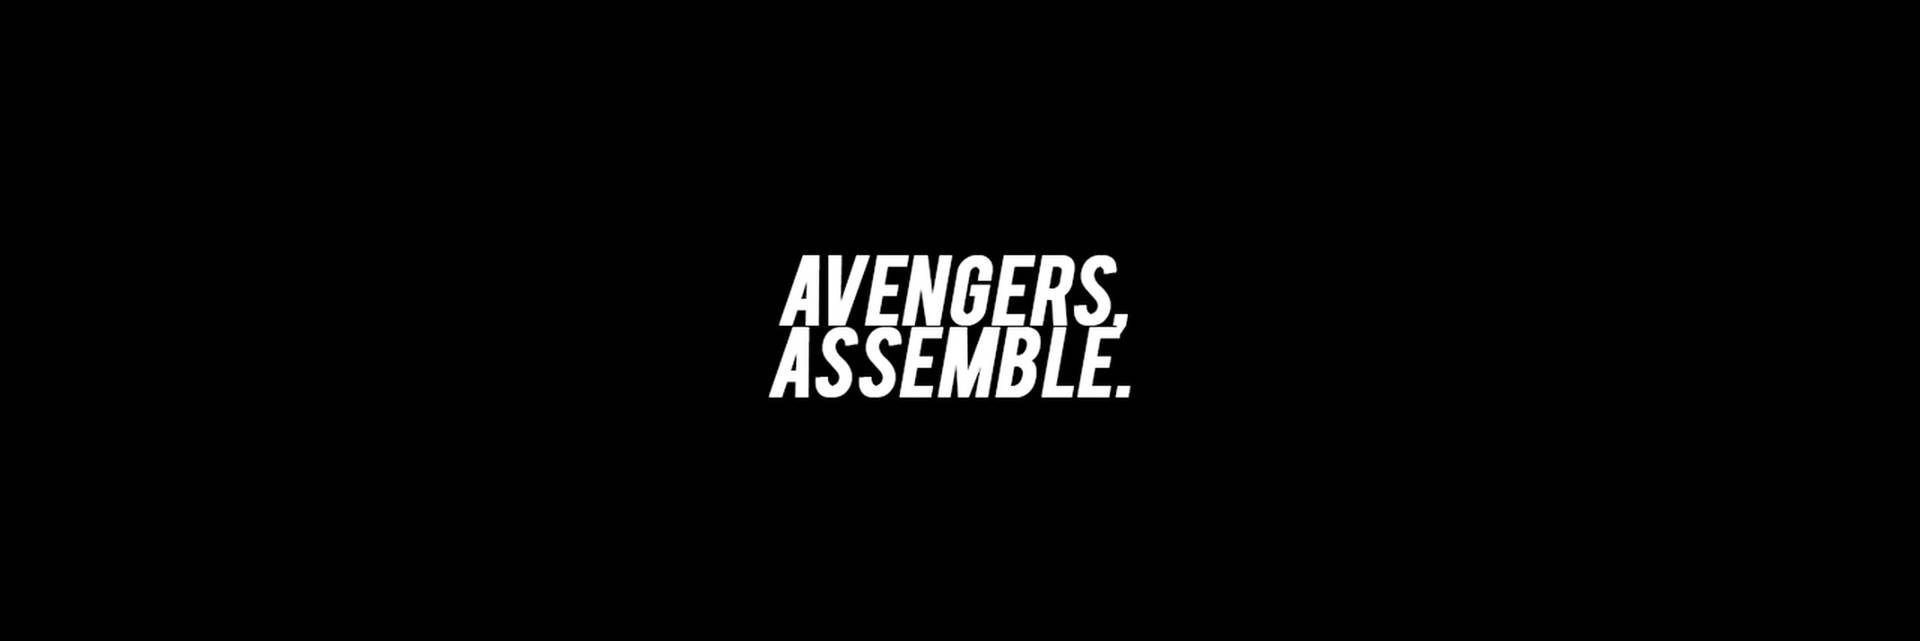 Avengers Assemble Black And White Wallpaper